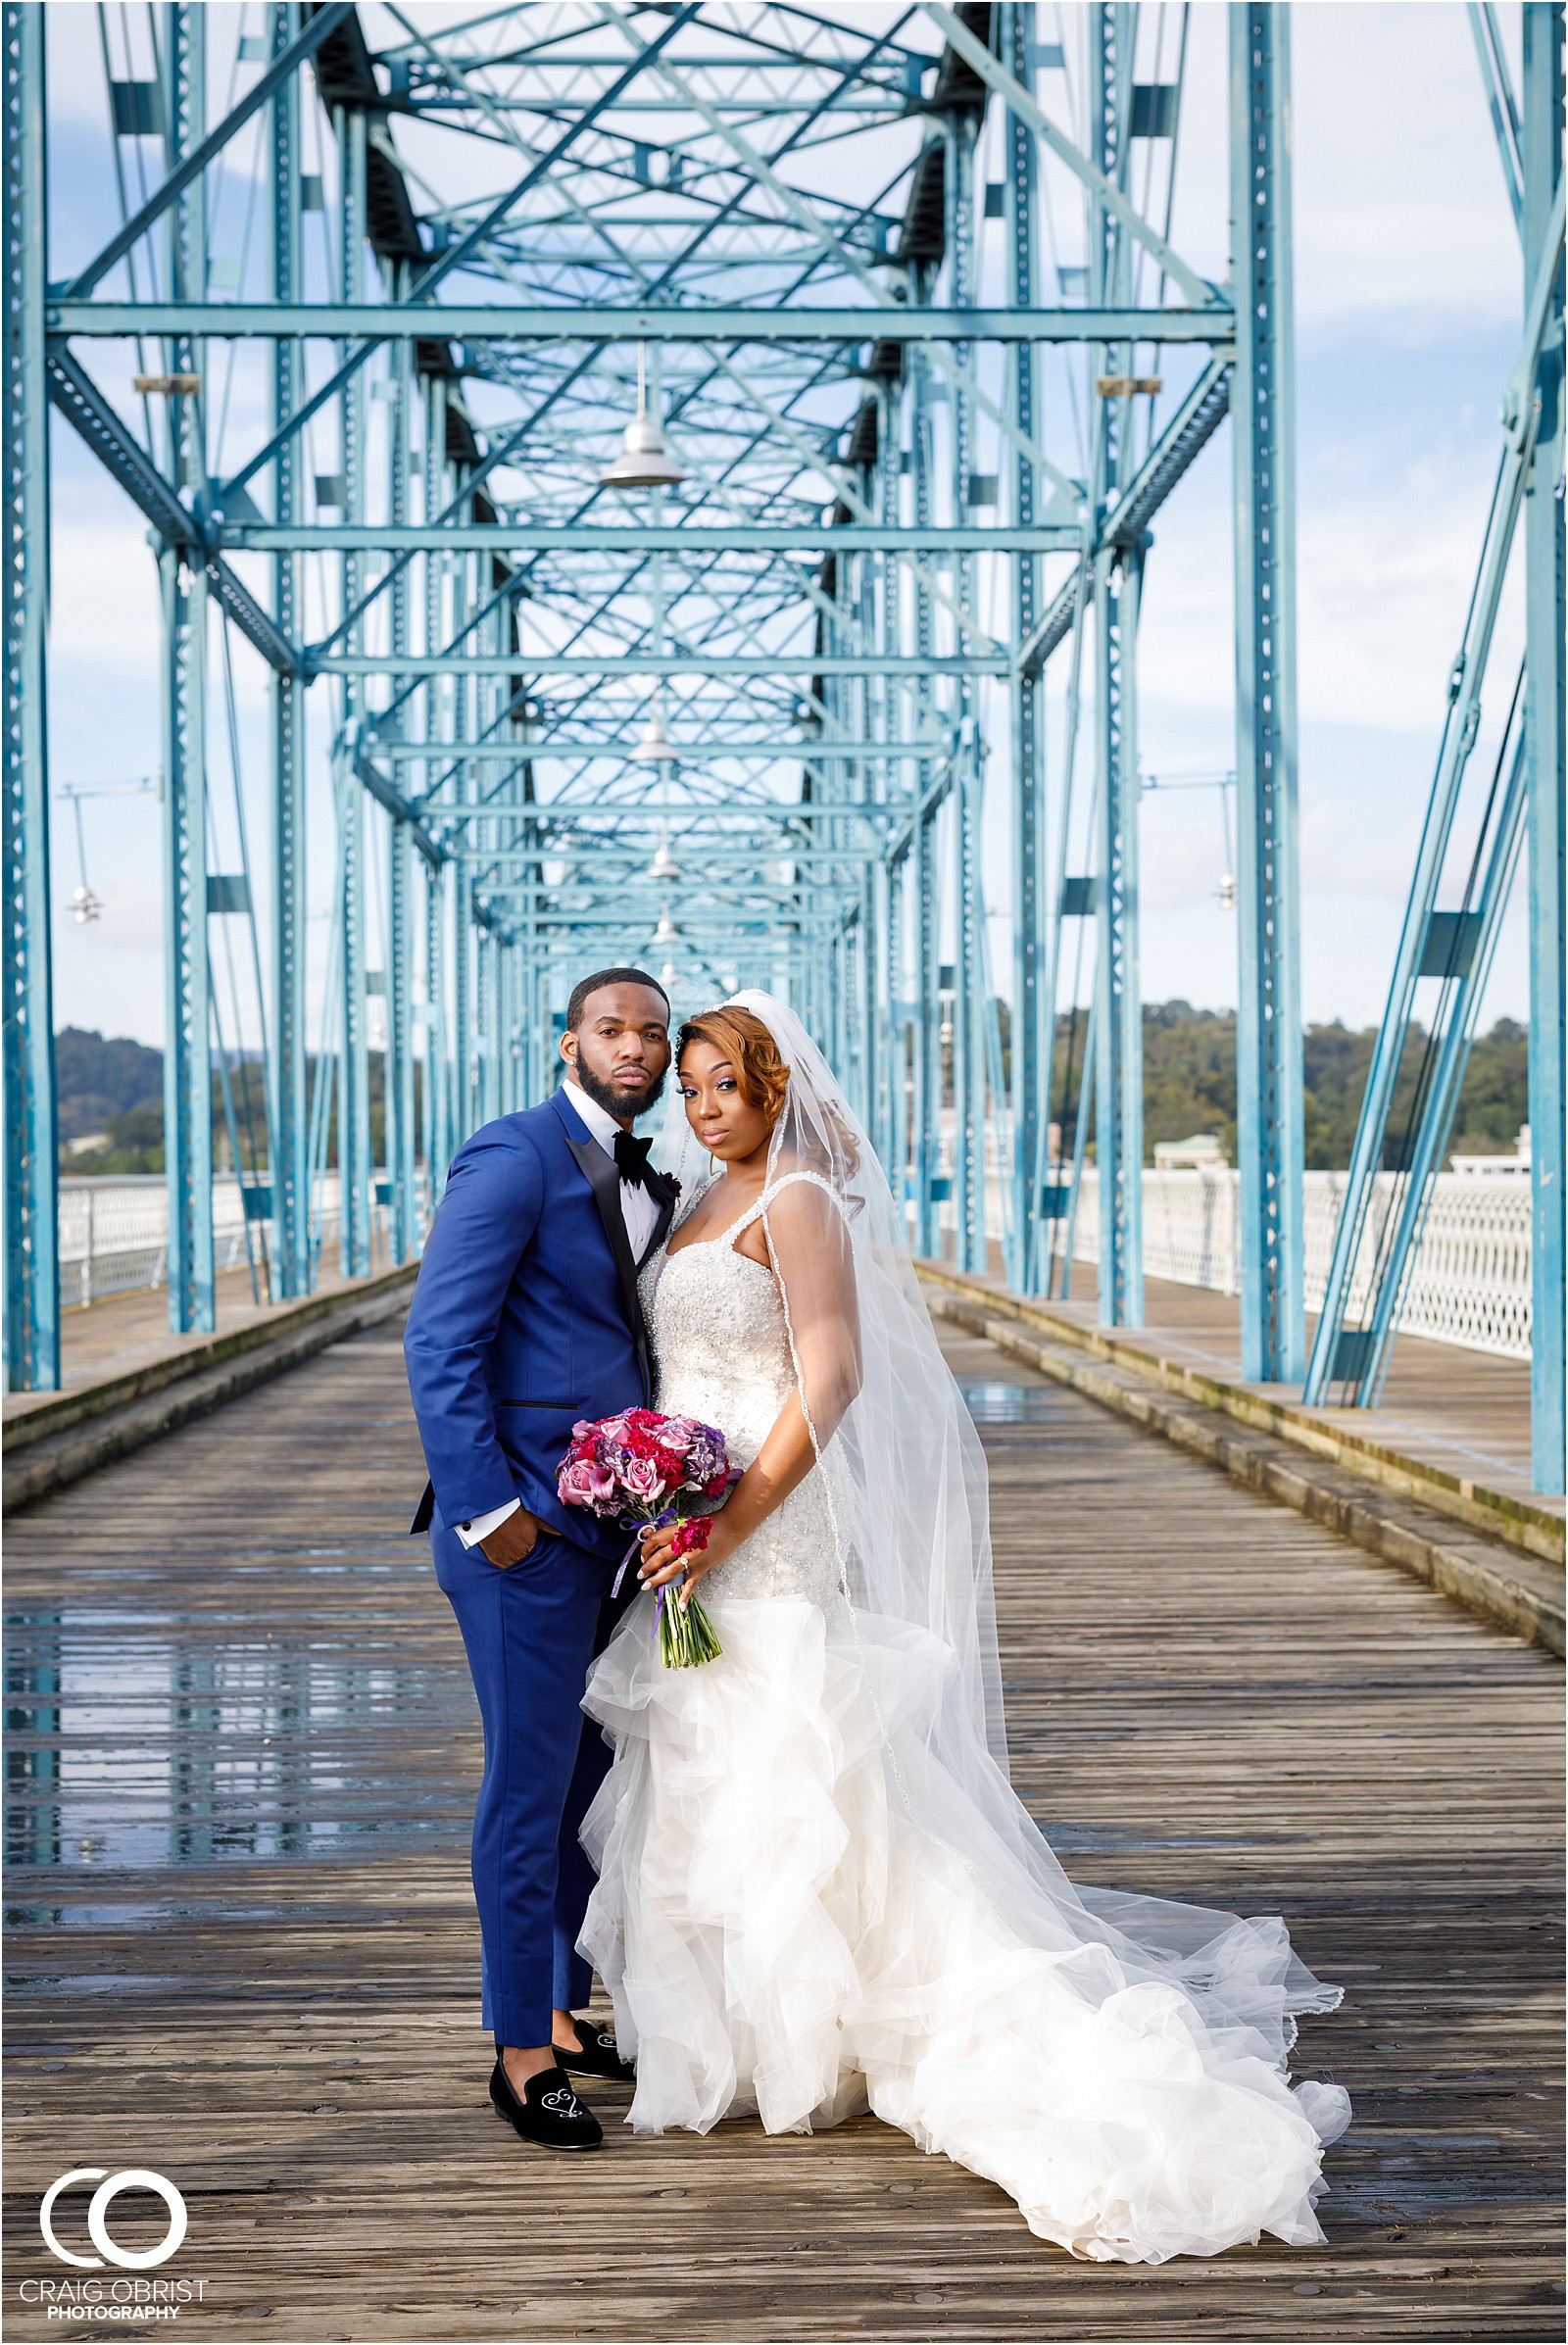 Stratton Hall Chattanooga Walnut Street Bridge Wedding Portraits_0038.jpg